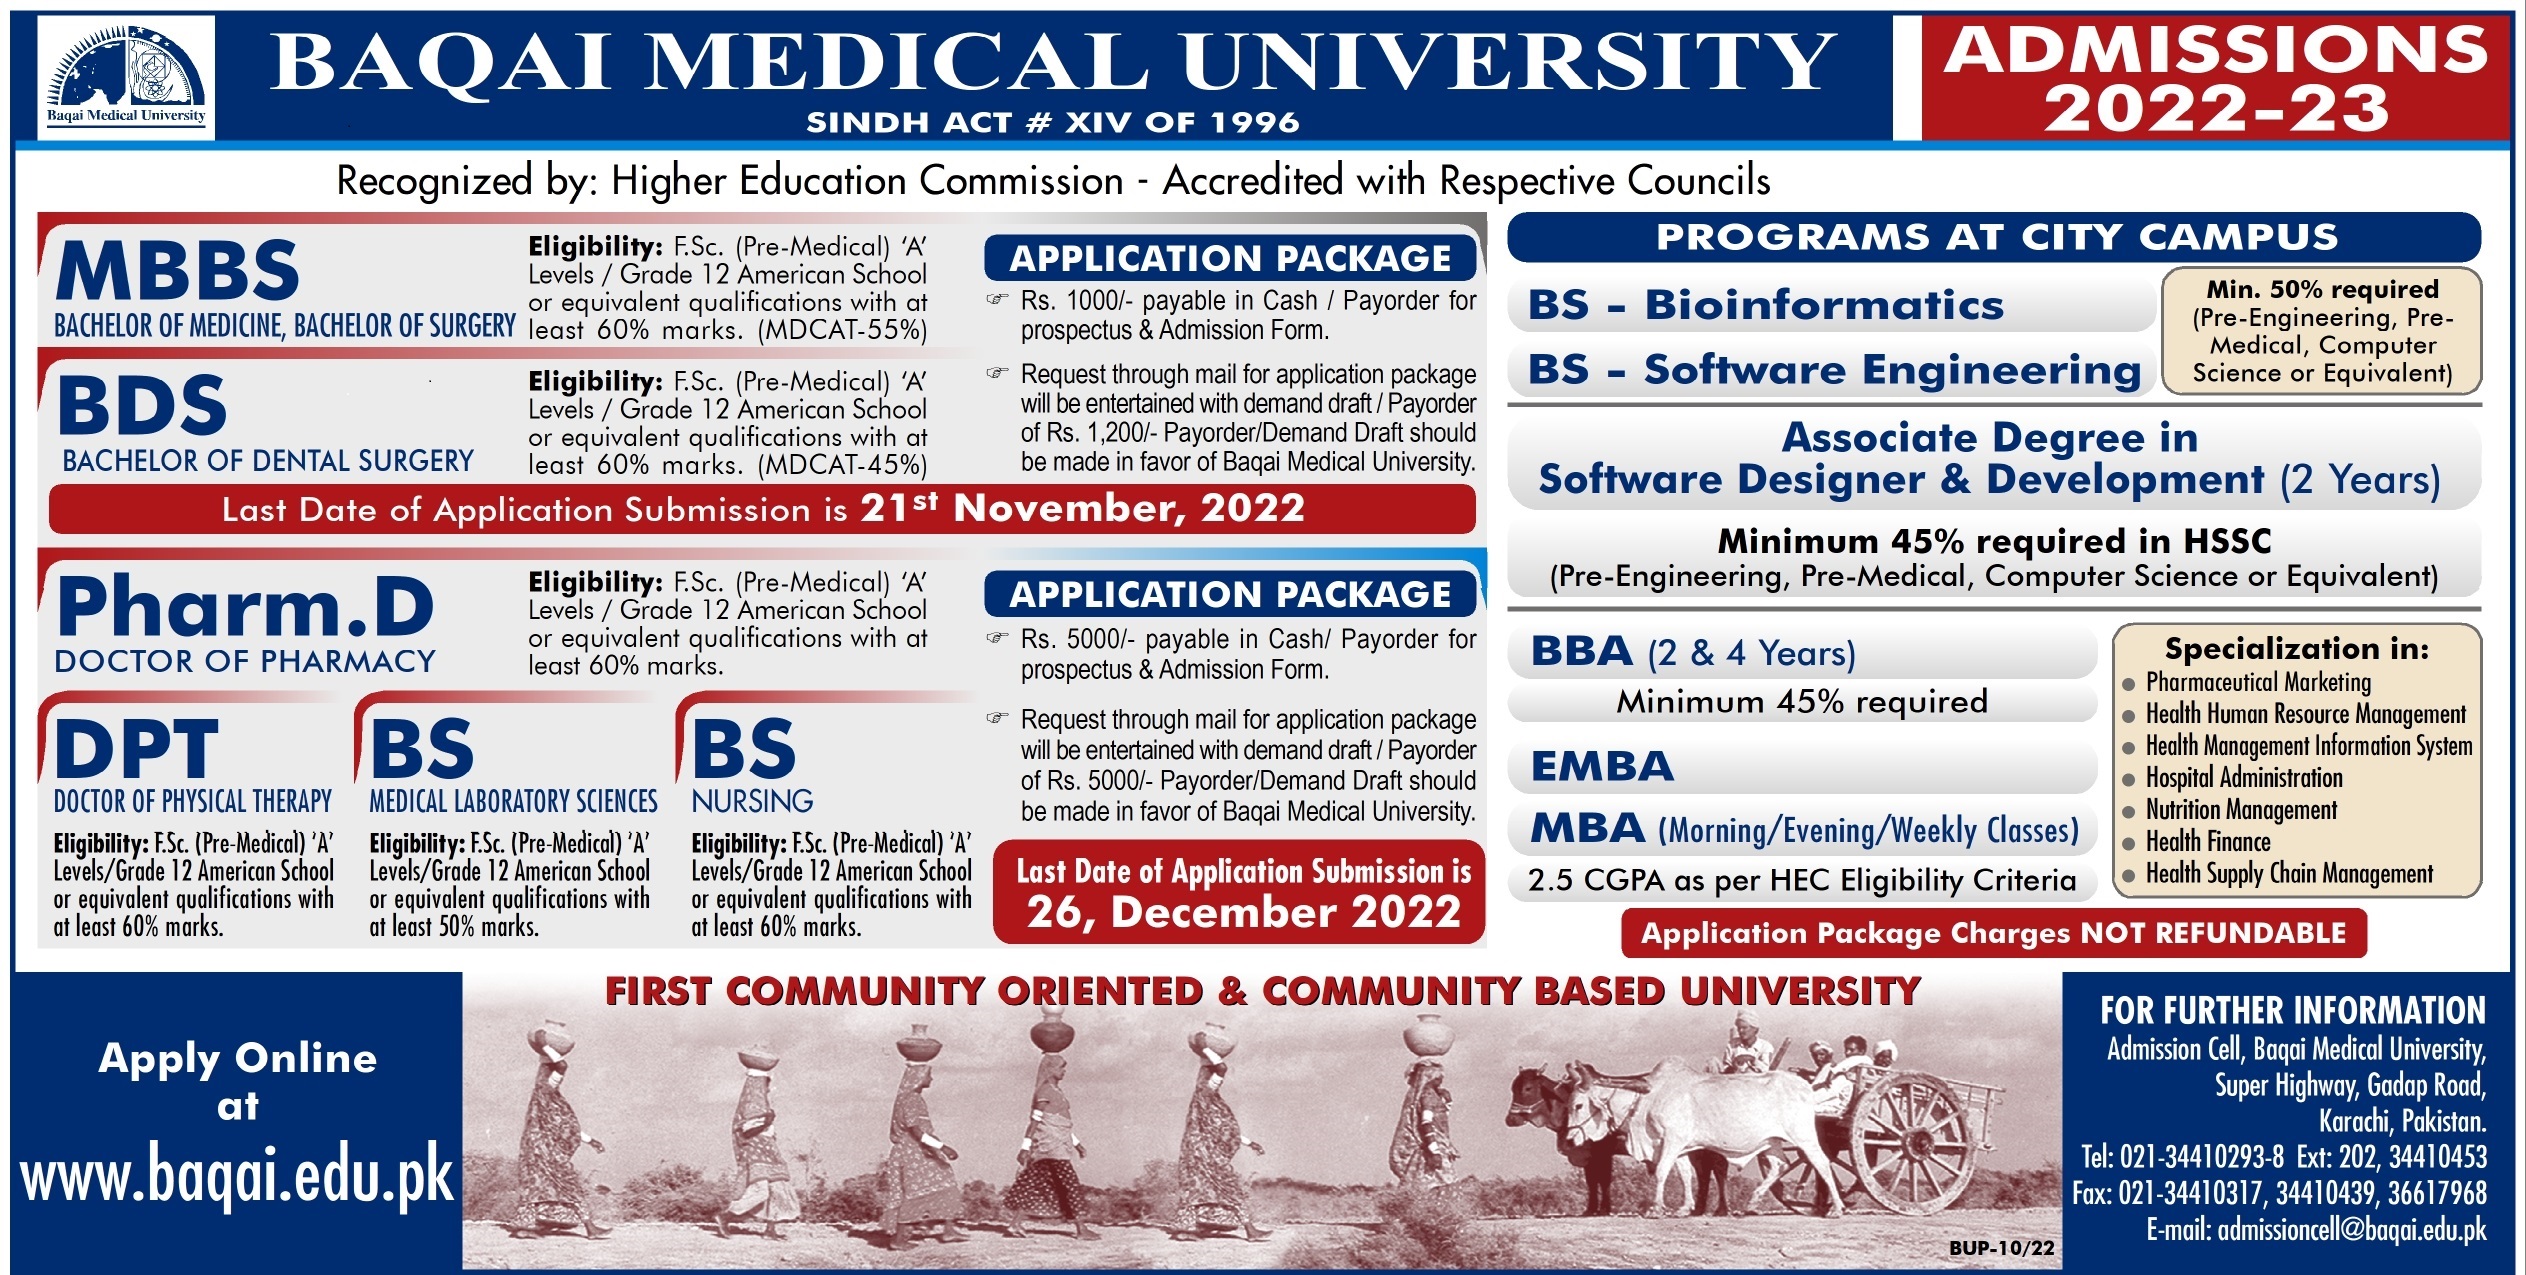 Baqai Medical University Admissions 2022